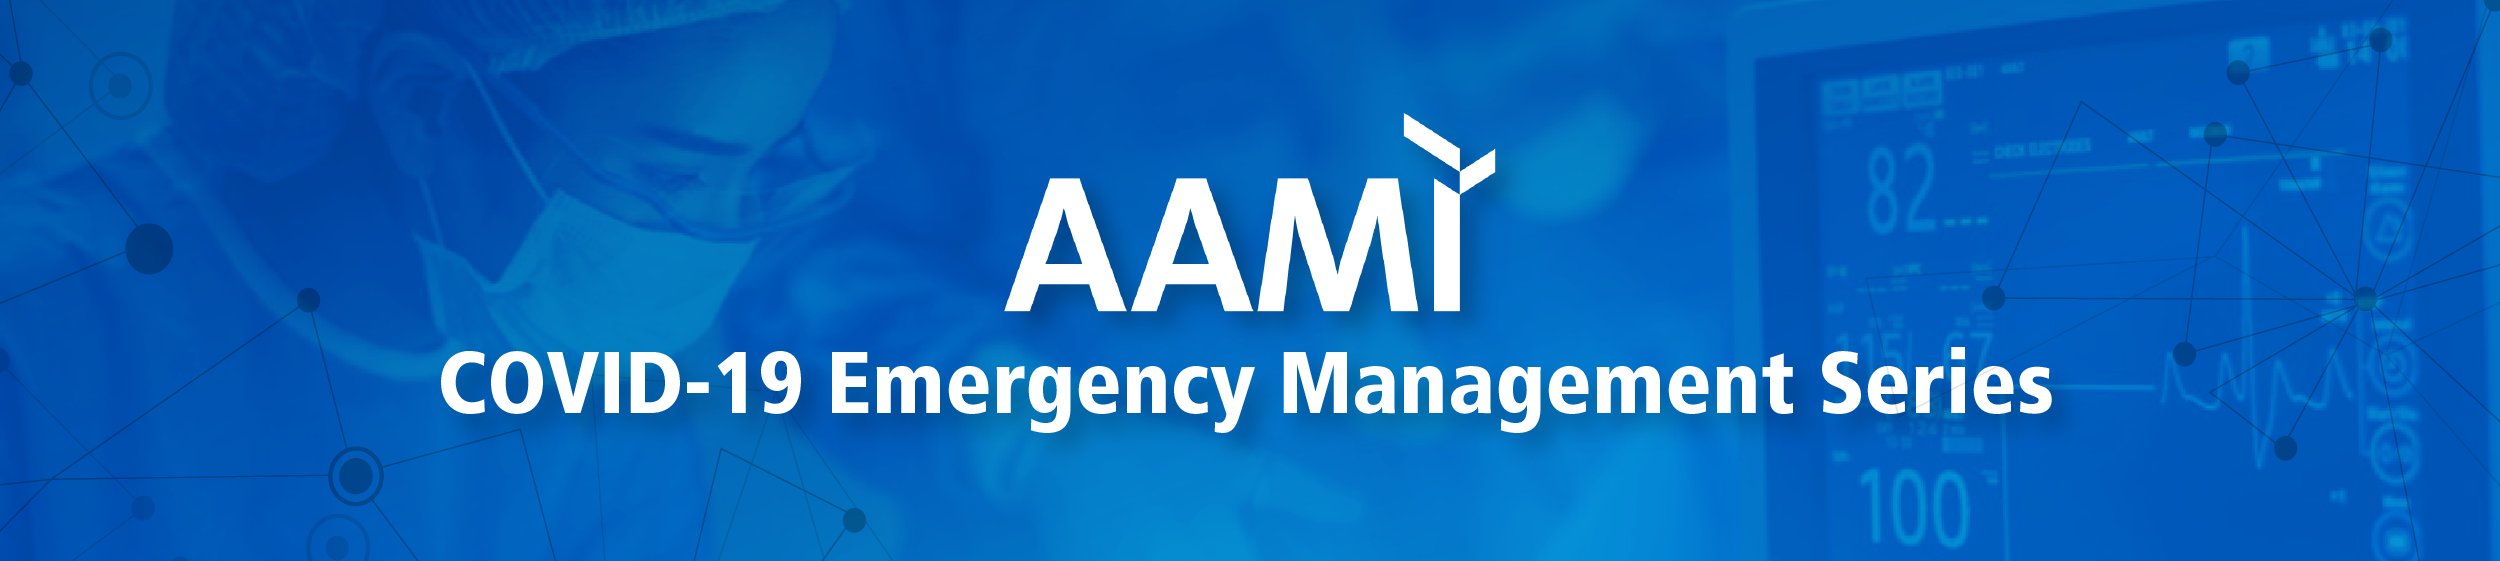 AAMI-Emergency-mgmt-series-01